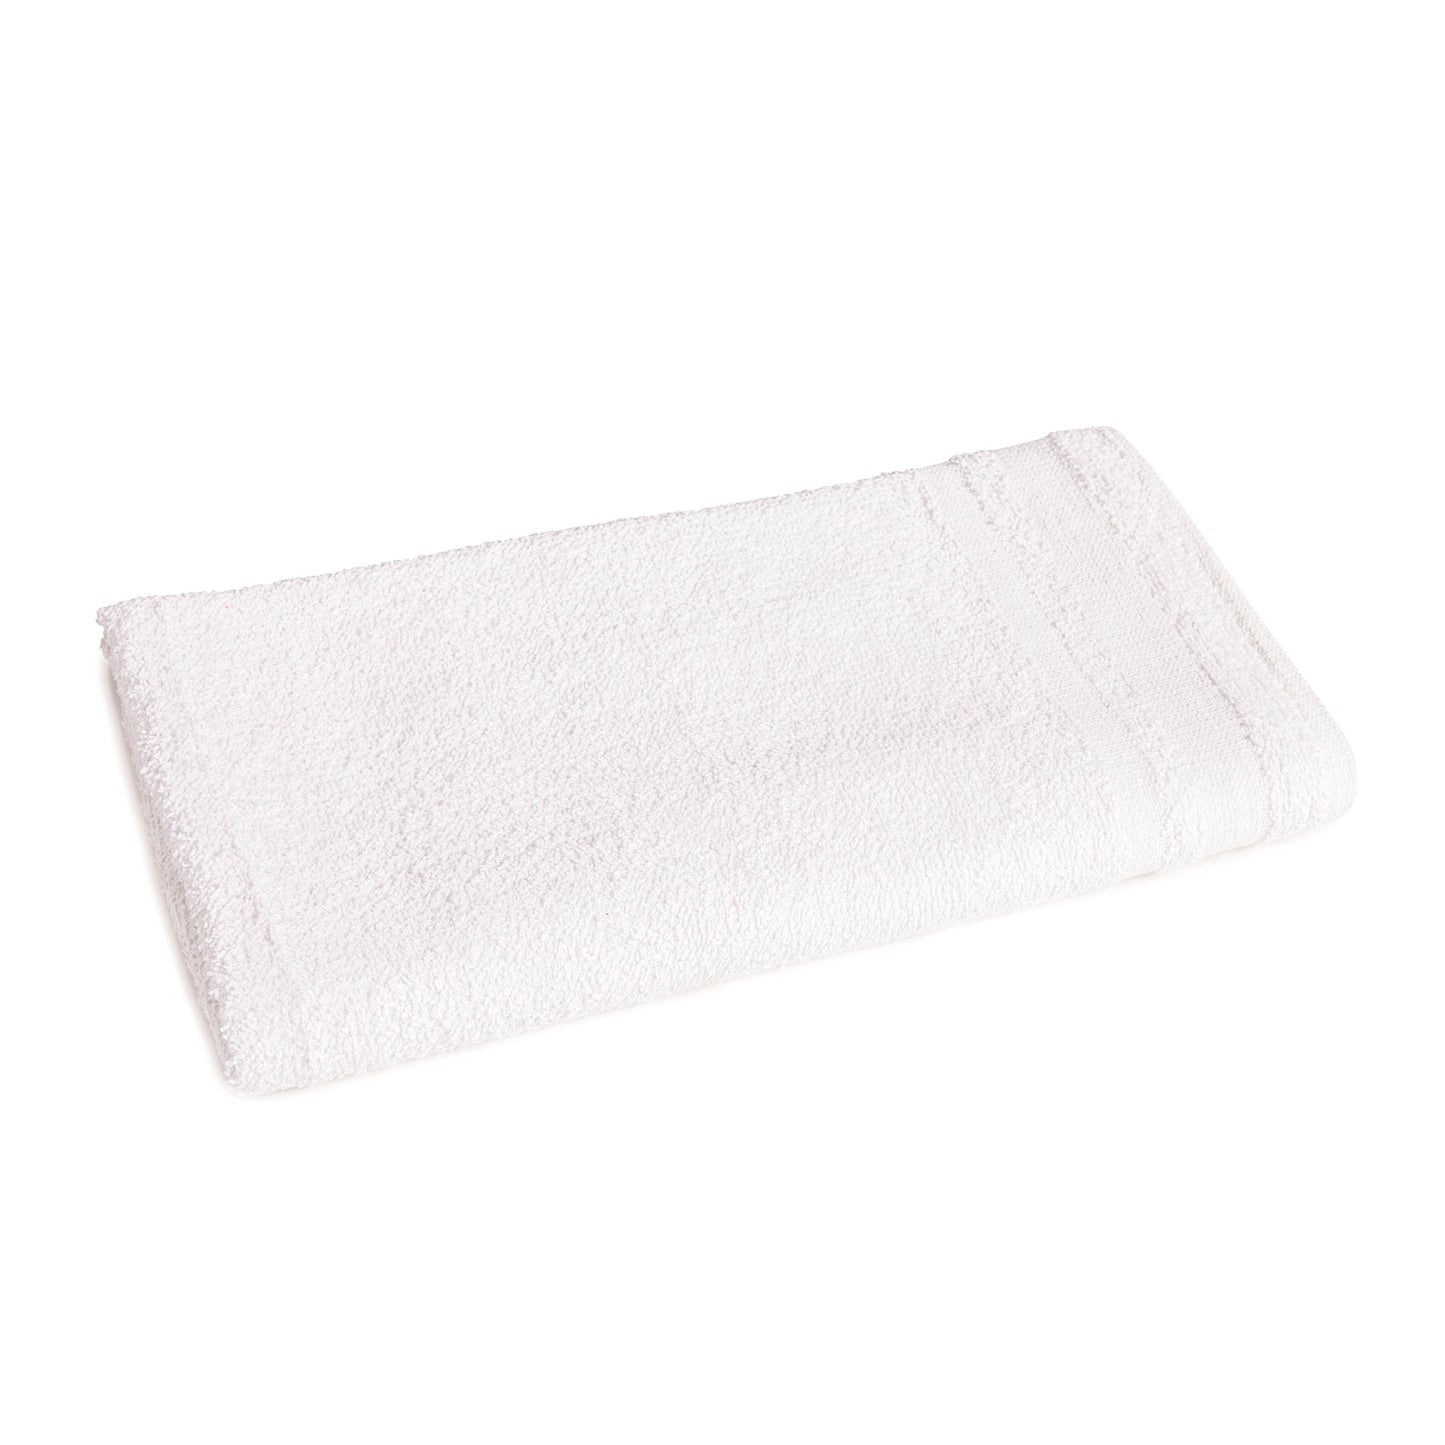 Bath Towel, 22x44 inch, Double Cam, 10 Single Pile, Hemmed, White